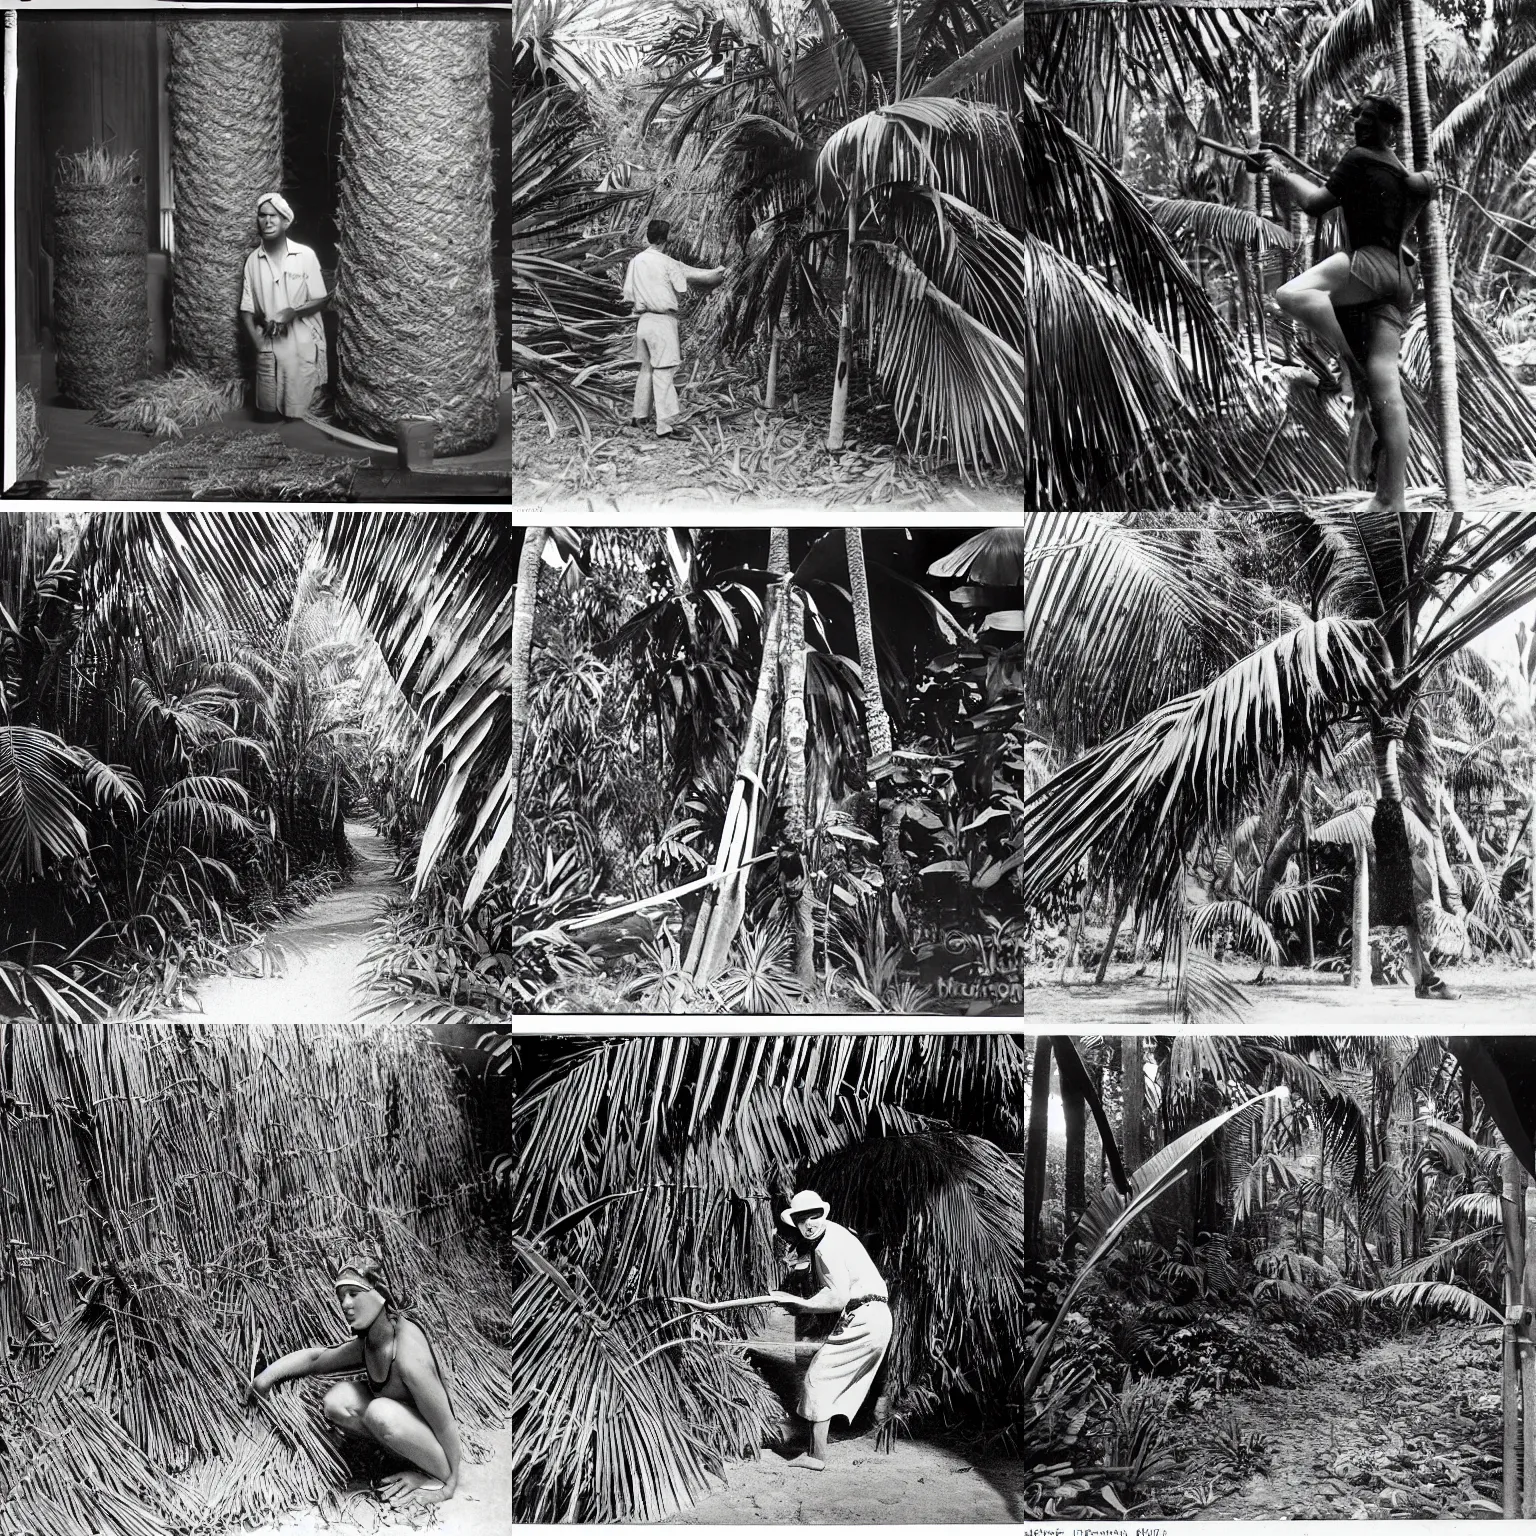 Prompt: lost film footage, pelote en paille de mais, xikrin, musee d ethongraphie geneve, tropical jungle, film still, cinematic, enhanced, 1 9 2 0 s, black and white, grain